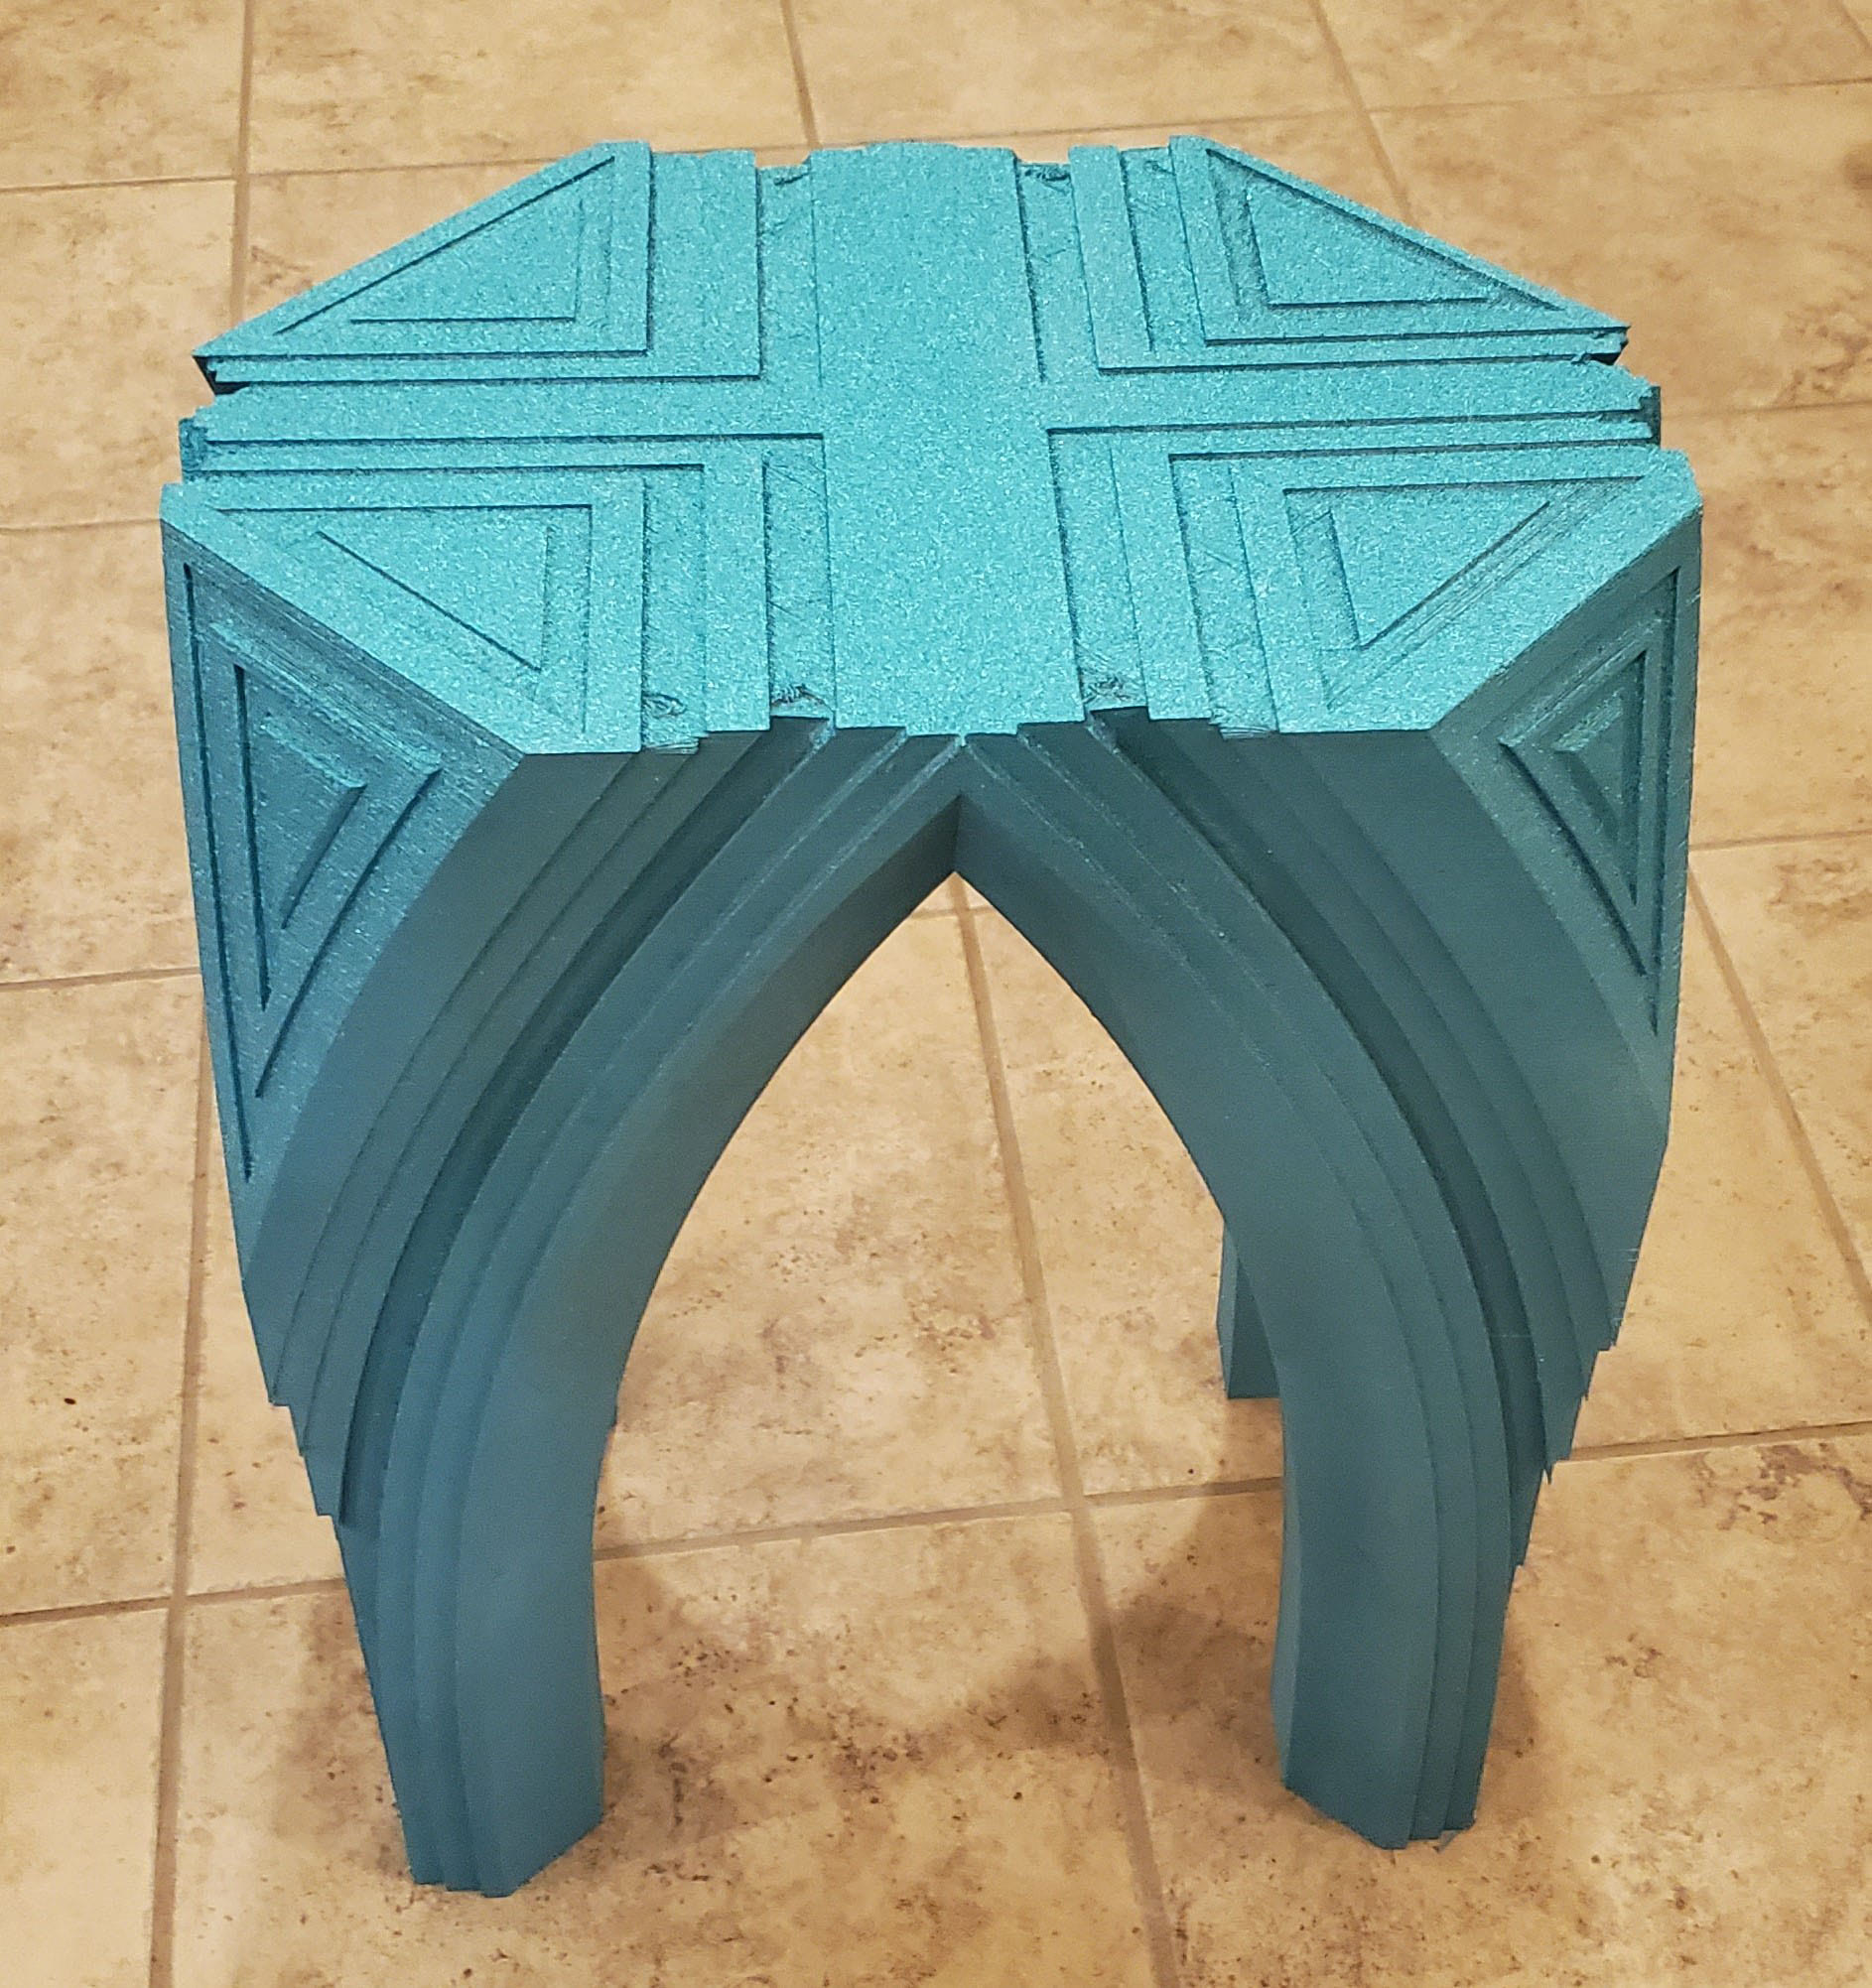 3d printed stool painted